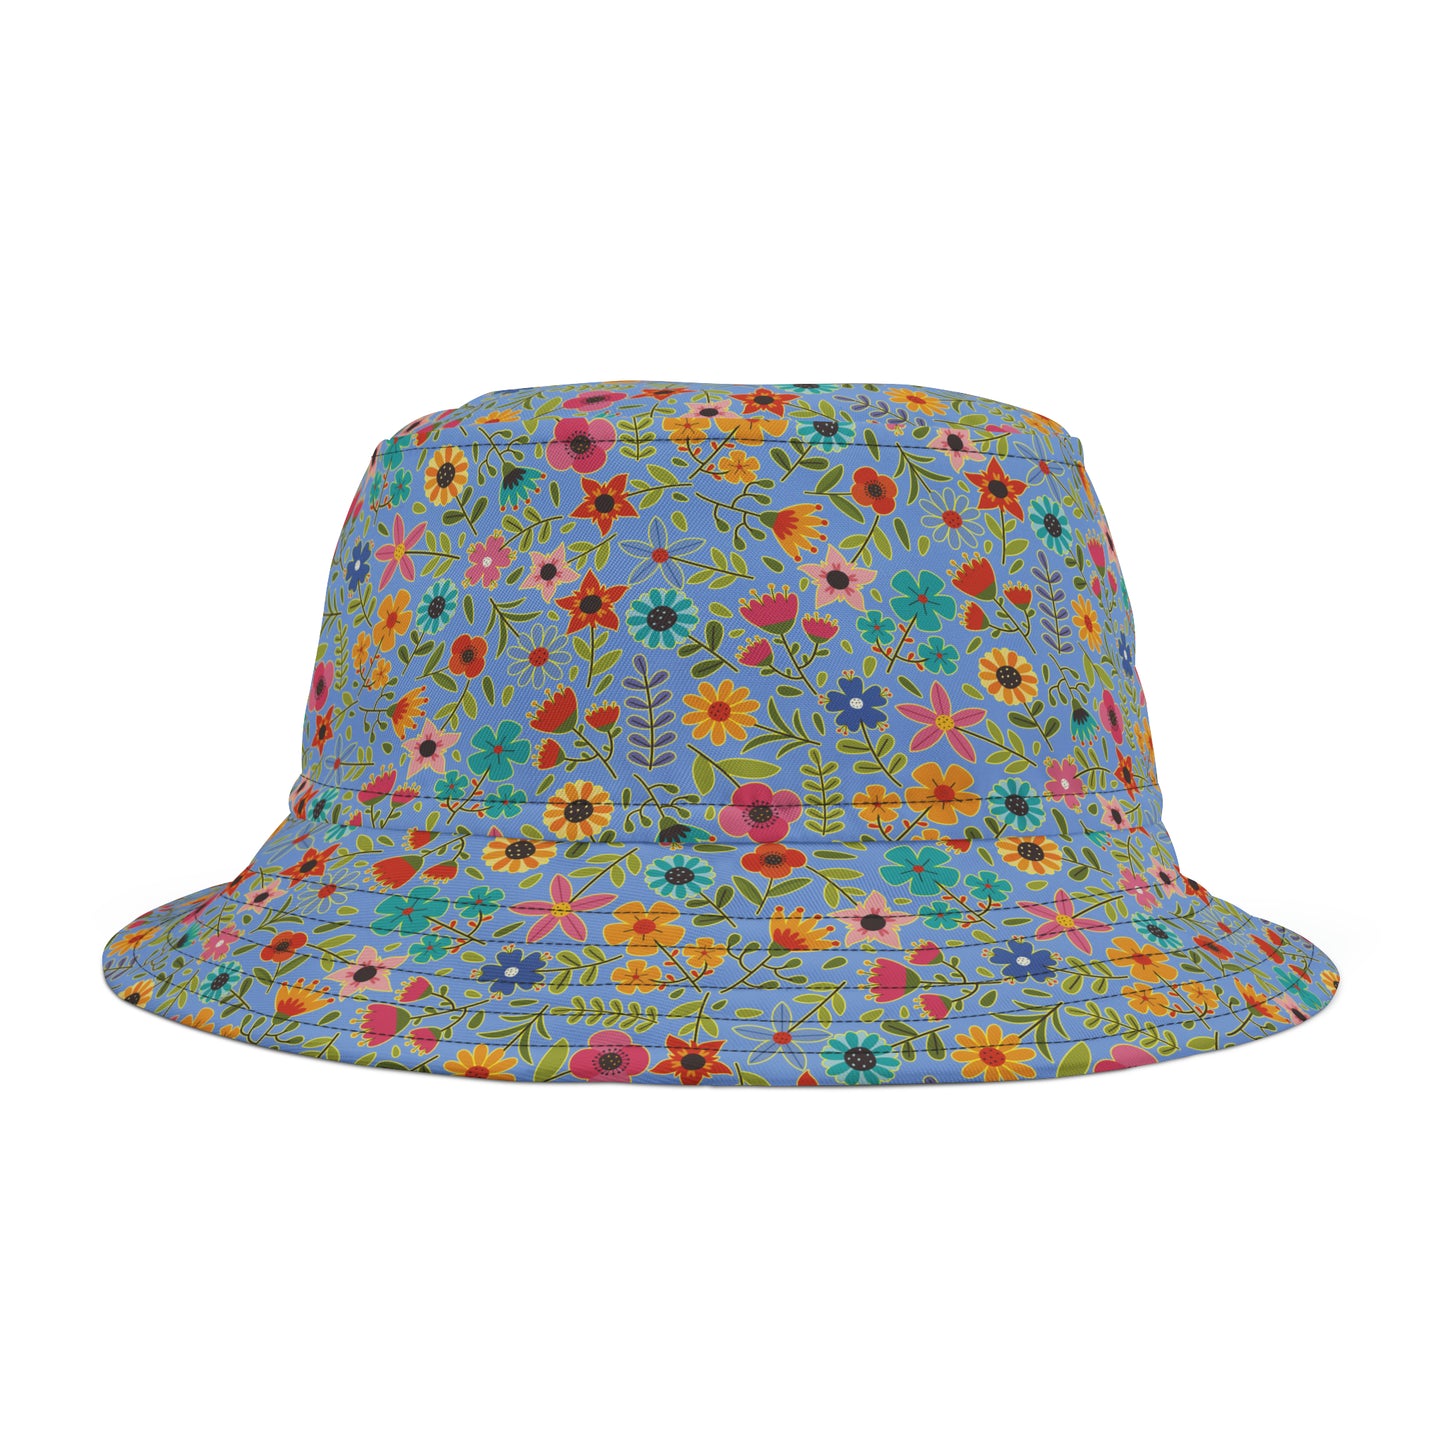 Playful Spring Flowers - Fennel Flower 74a6ff - Bucket Hat (AOP)